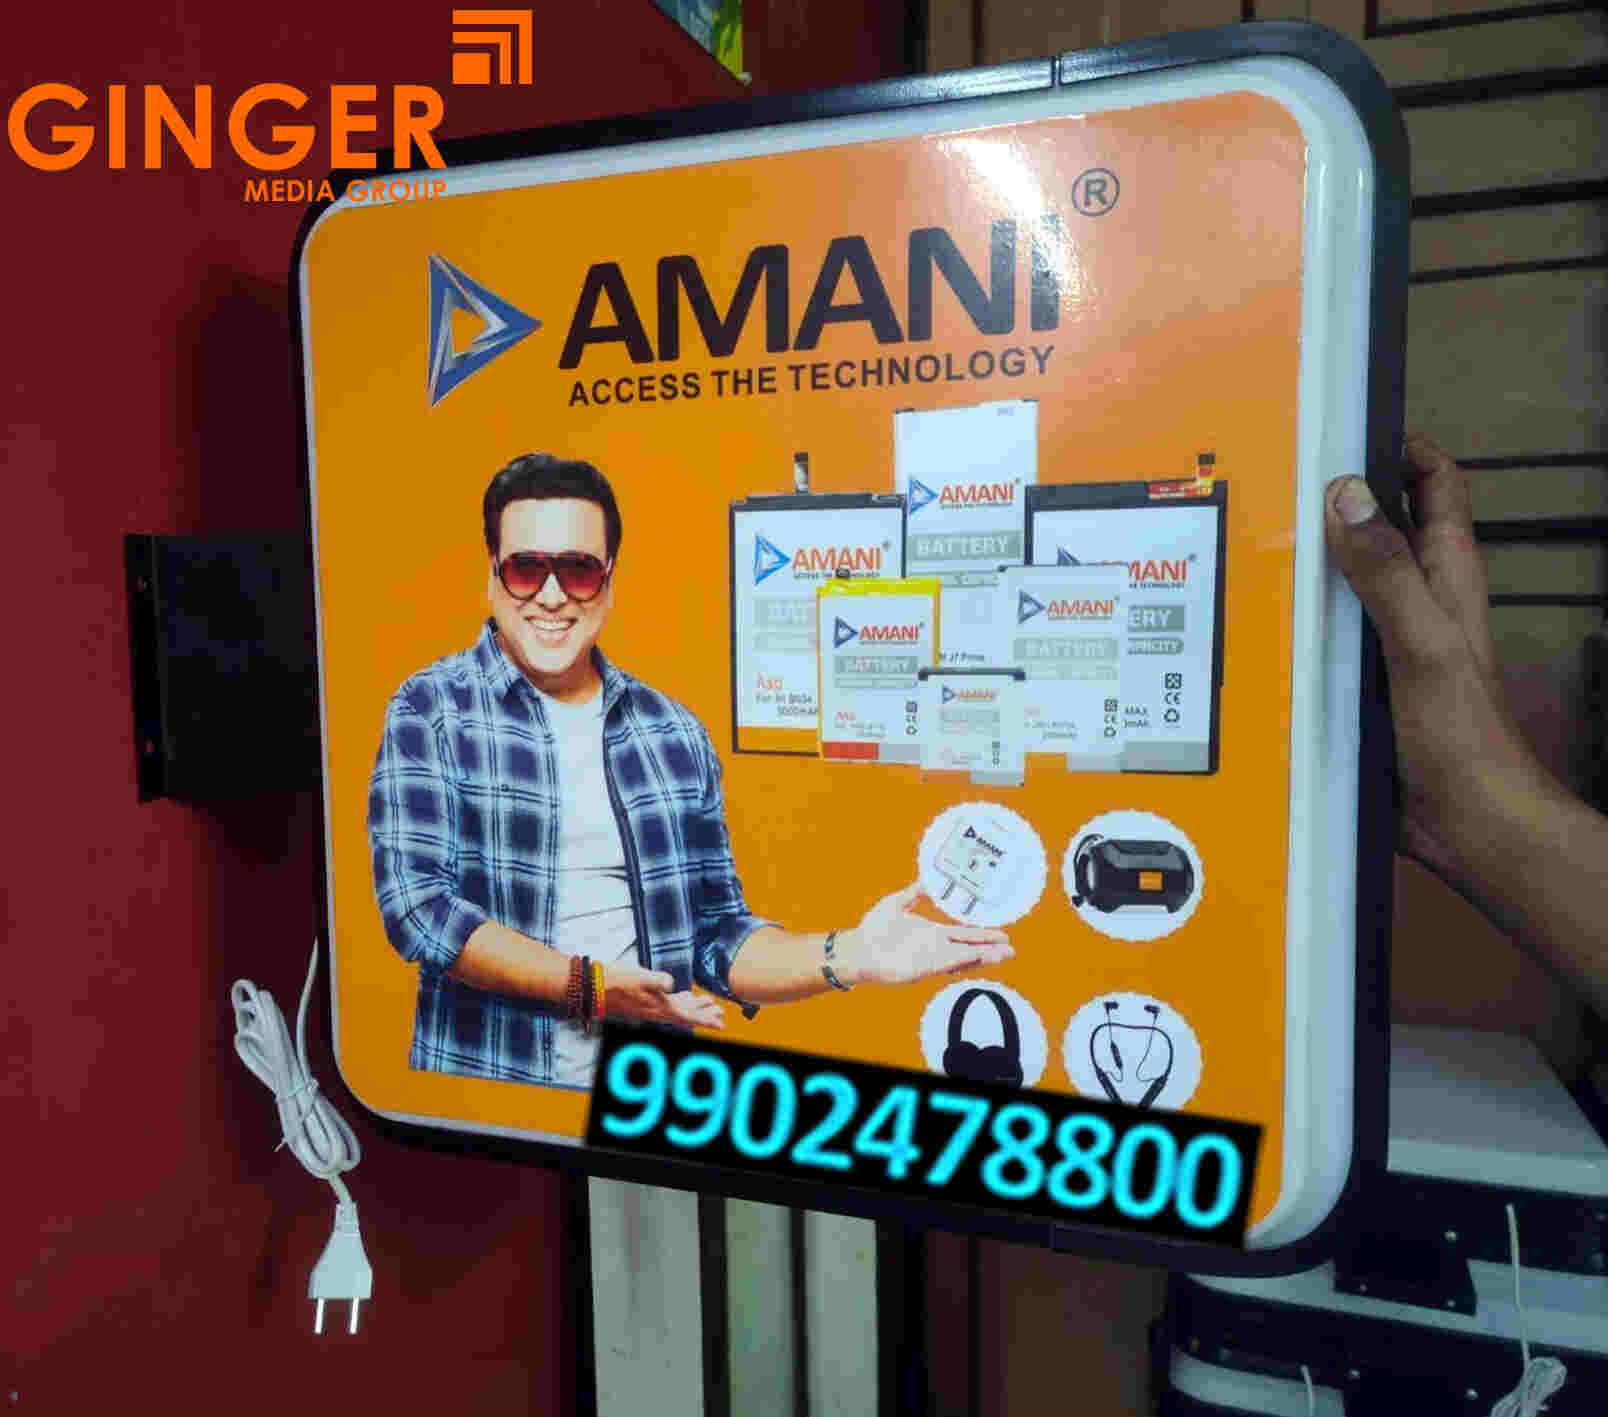 flange board branding amani 100